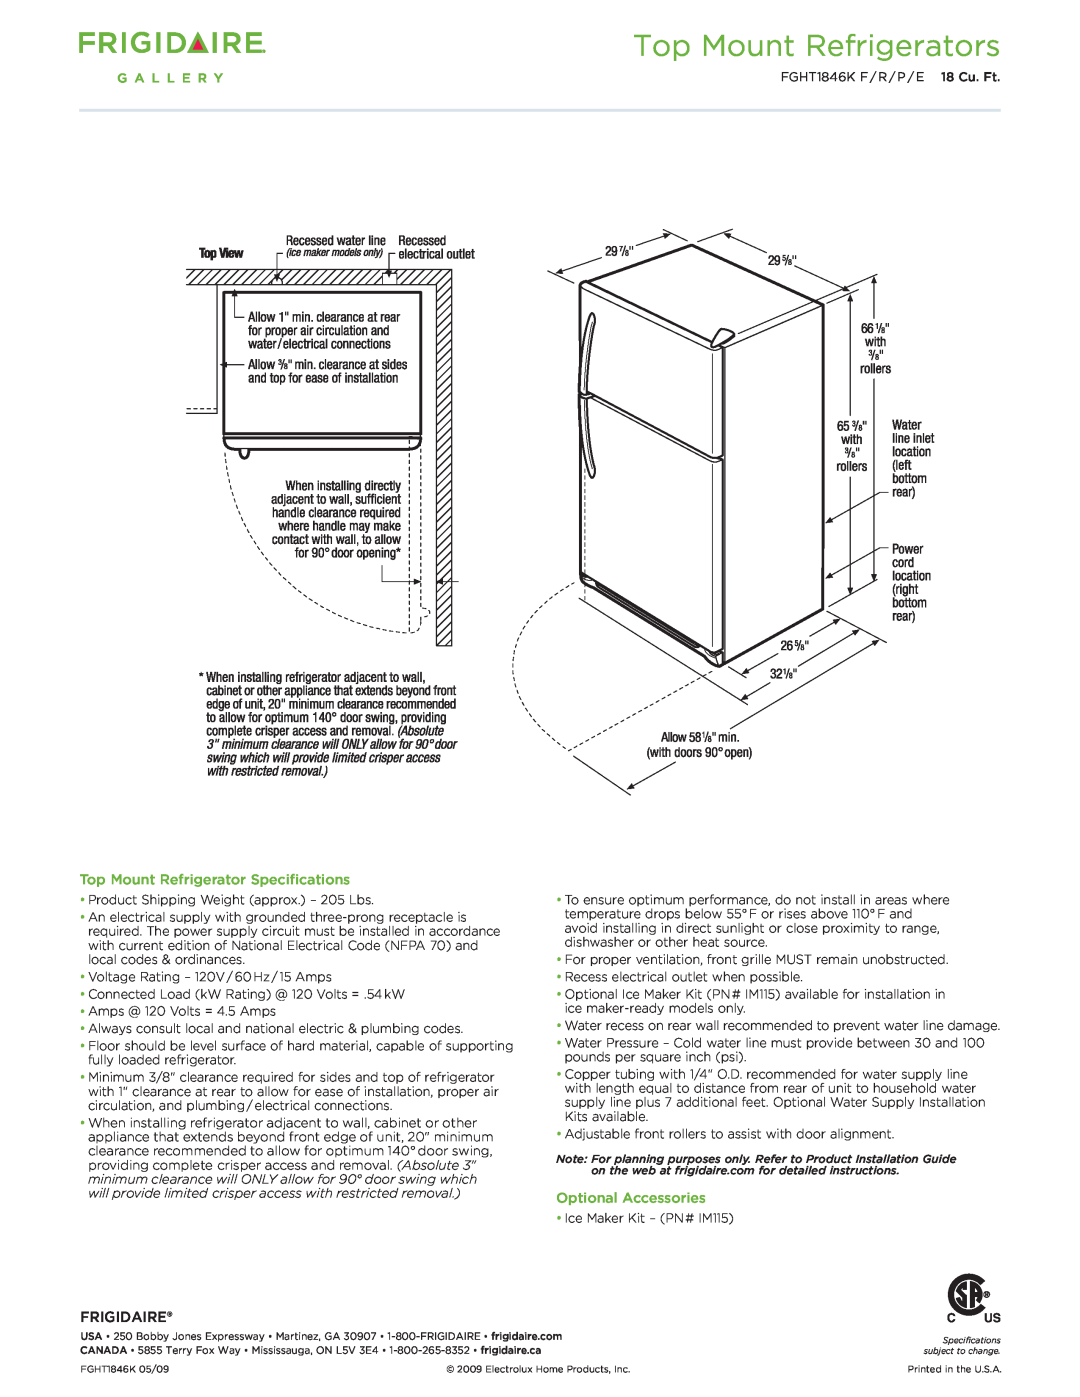 Frigidaire FGHT1846k Top Mount Refrigerator Specifications, Optional Accessories, Frigidaire, Top Mount Refrigerators 